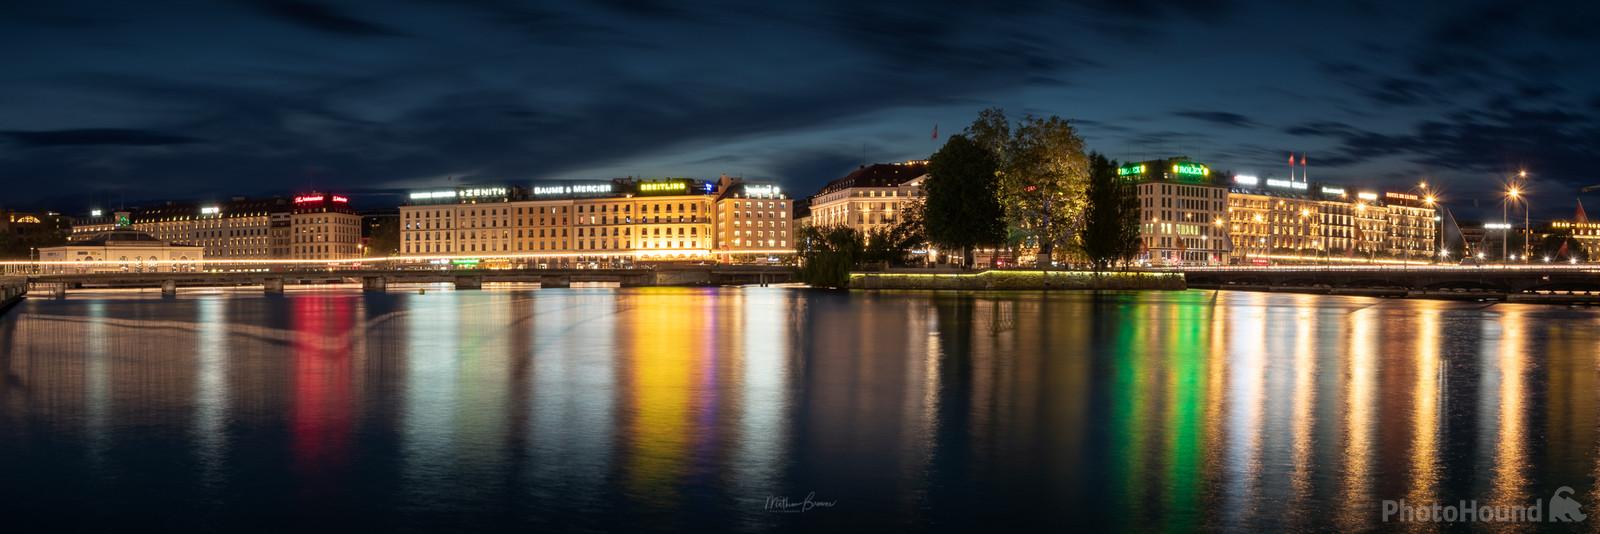 Image of Genève-Molard Waterfront by Mathew Browne